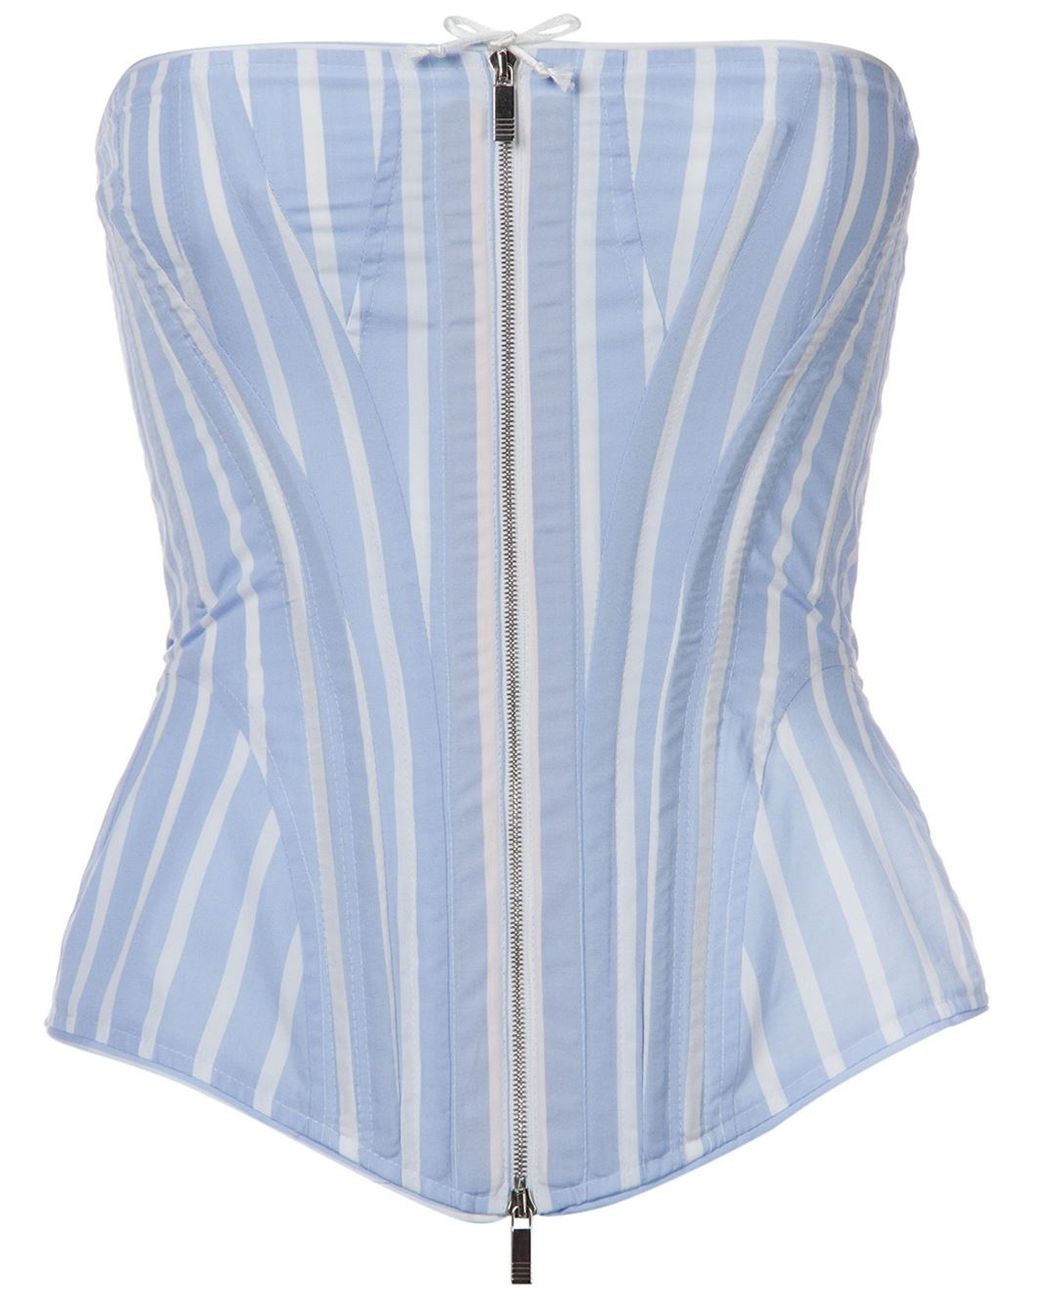 https://cdna.lystit.com/1040/1300/n/photos/58b4-2015/05/25/thom-browne-blue-striped-corset-top-product-4-302212556-normal.jpeg